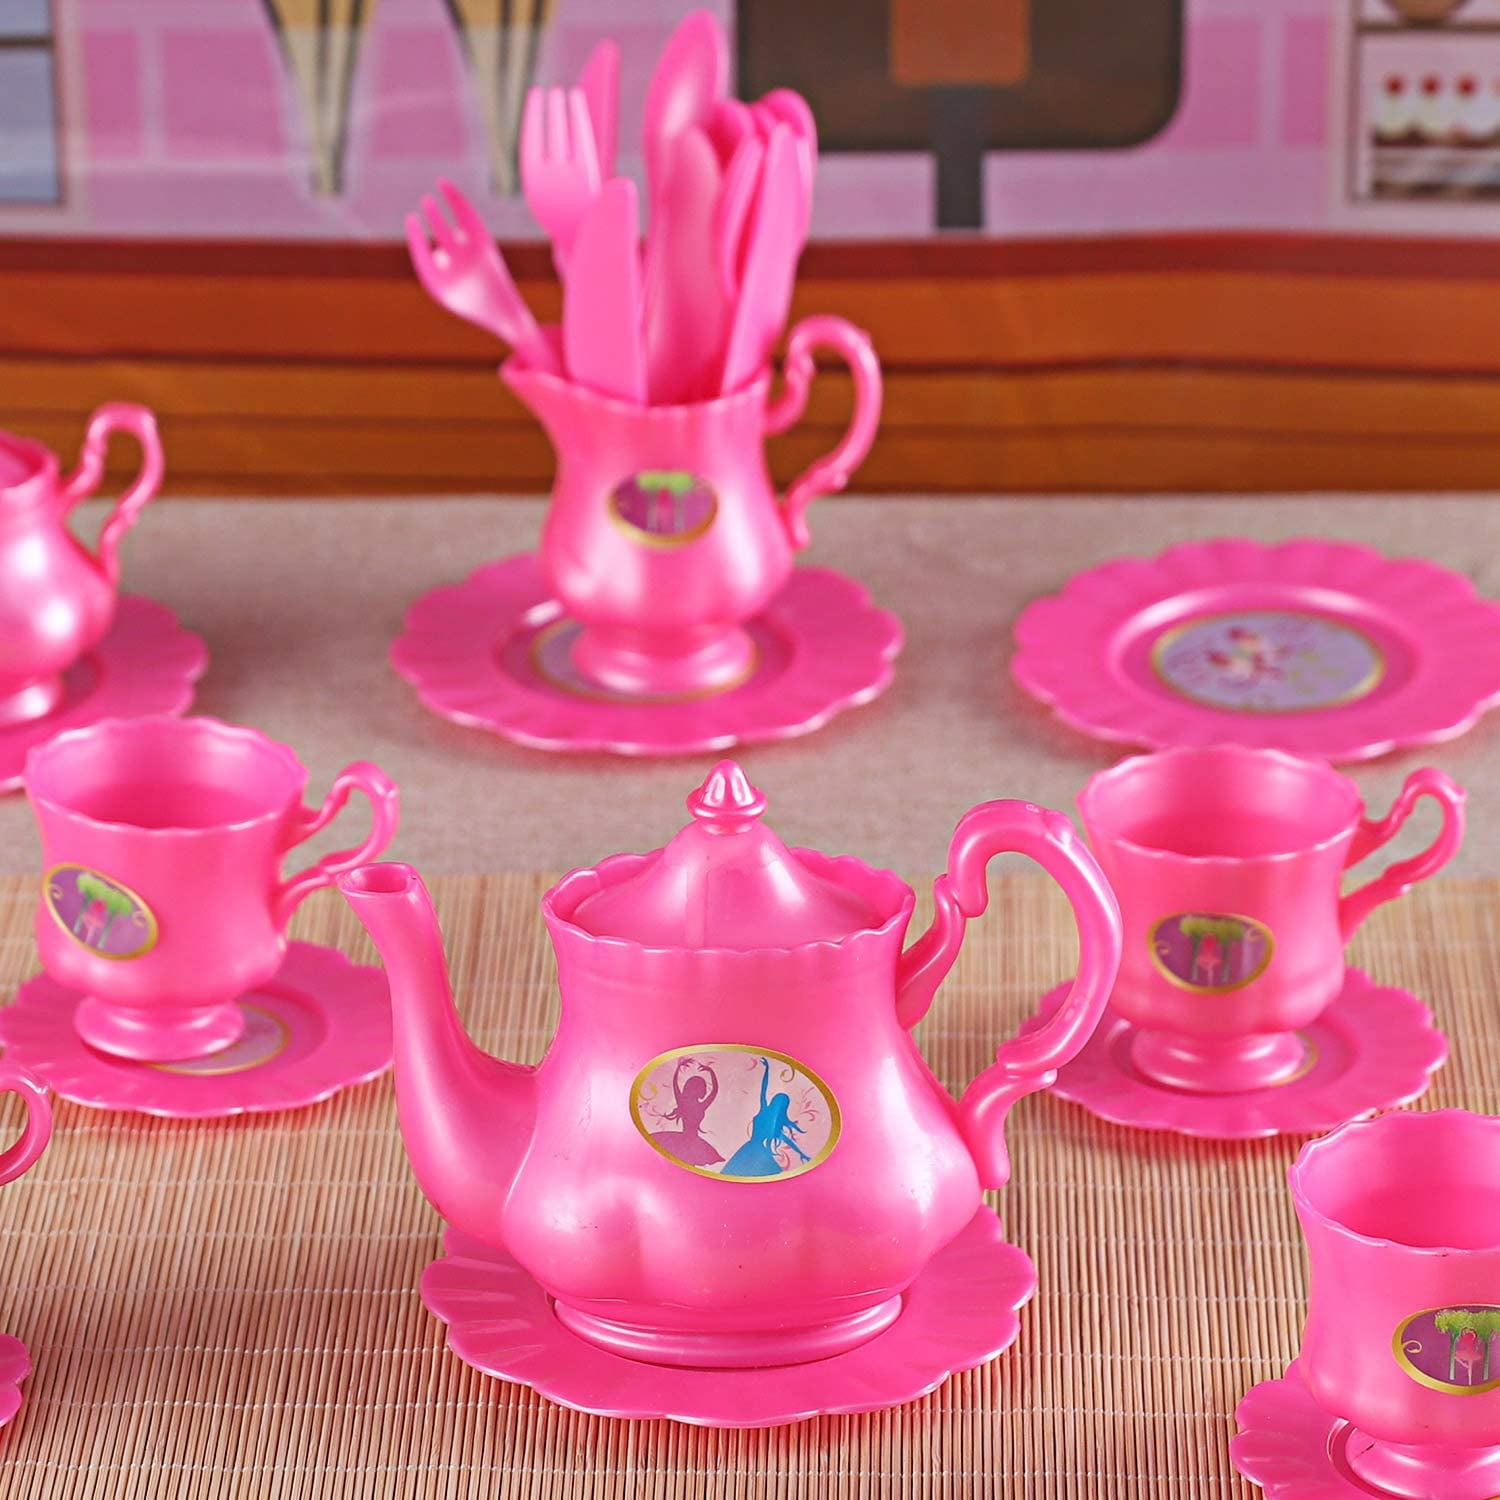 Princess Tea Party Set With Pink Tea Pots And Kitchen Utensils 29 Piece #PS498 